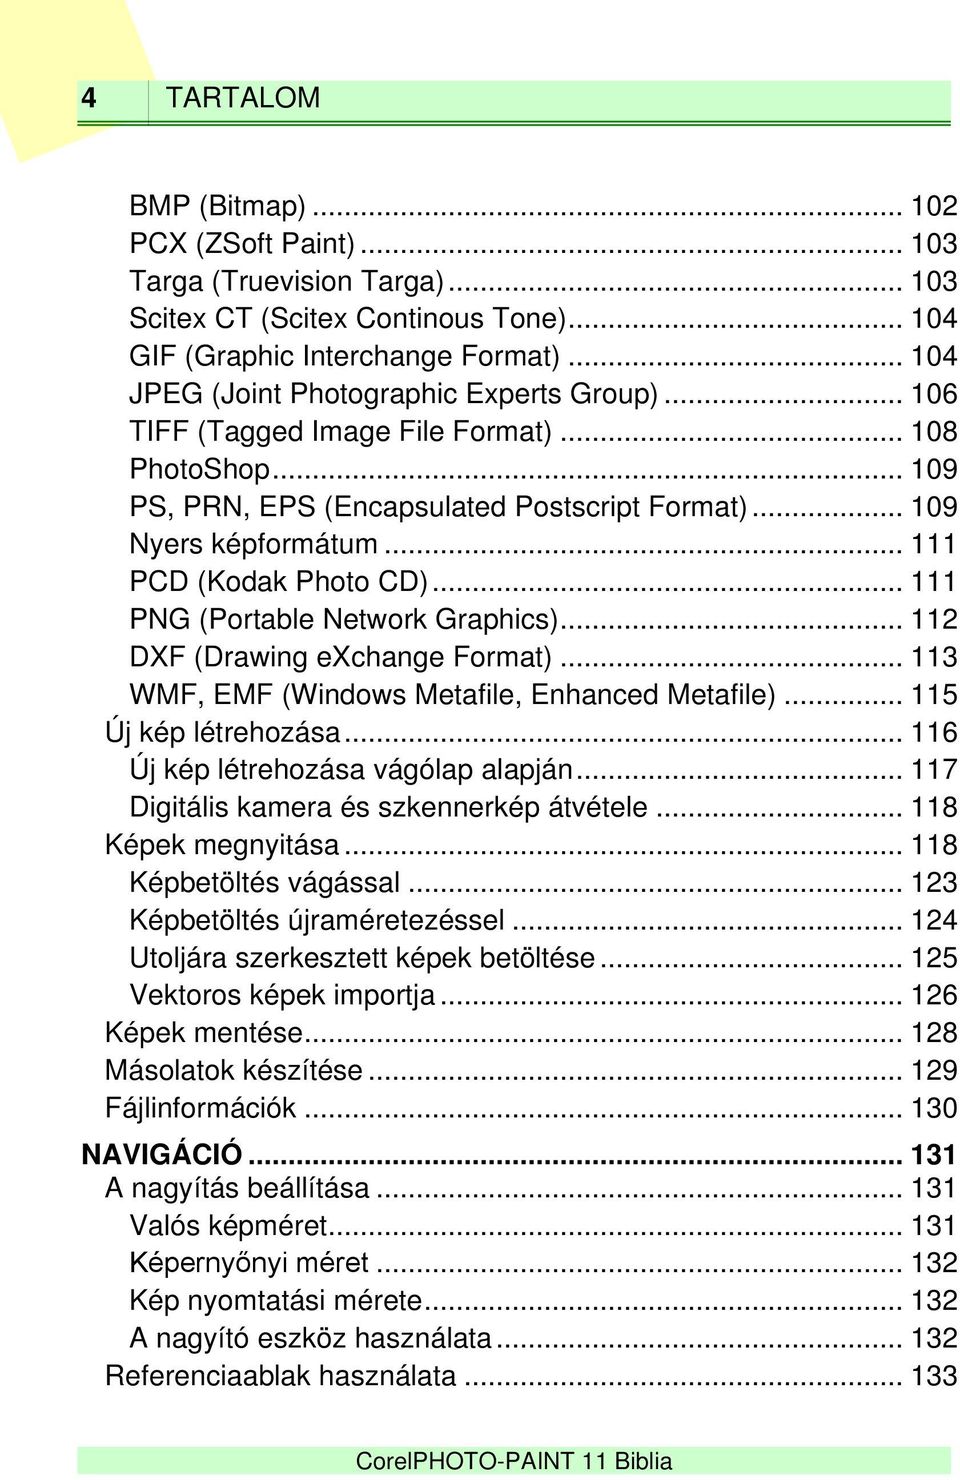 .. 111 PCD (Kodak Photo CD)... 111 PNG (Portable Network Graphics)... 112 DXF (Drawing exchange Format)... 113 WMF, EMF (Windows Metafile, Enhanced Metafile)... 115 Új kép létrehozása.